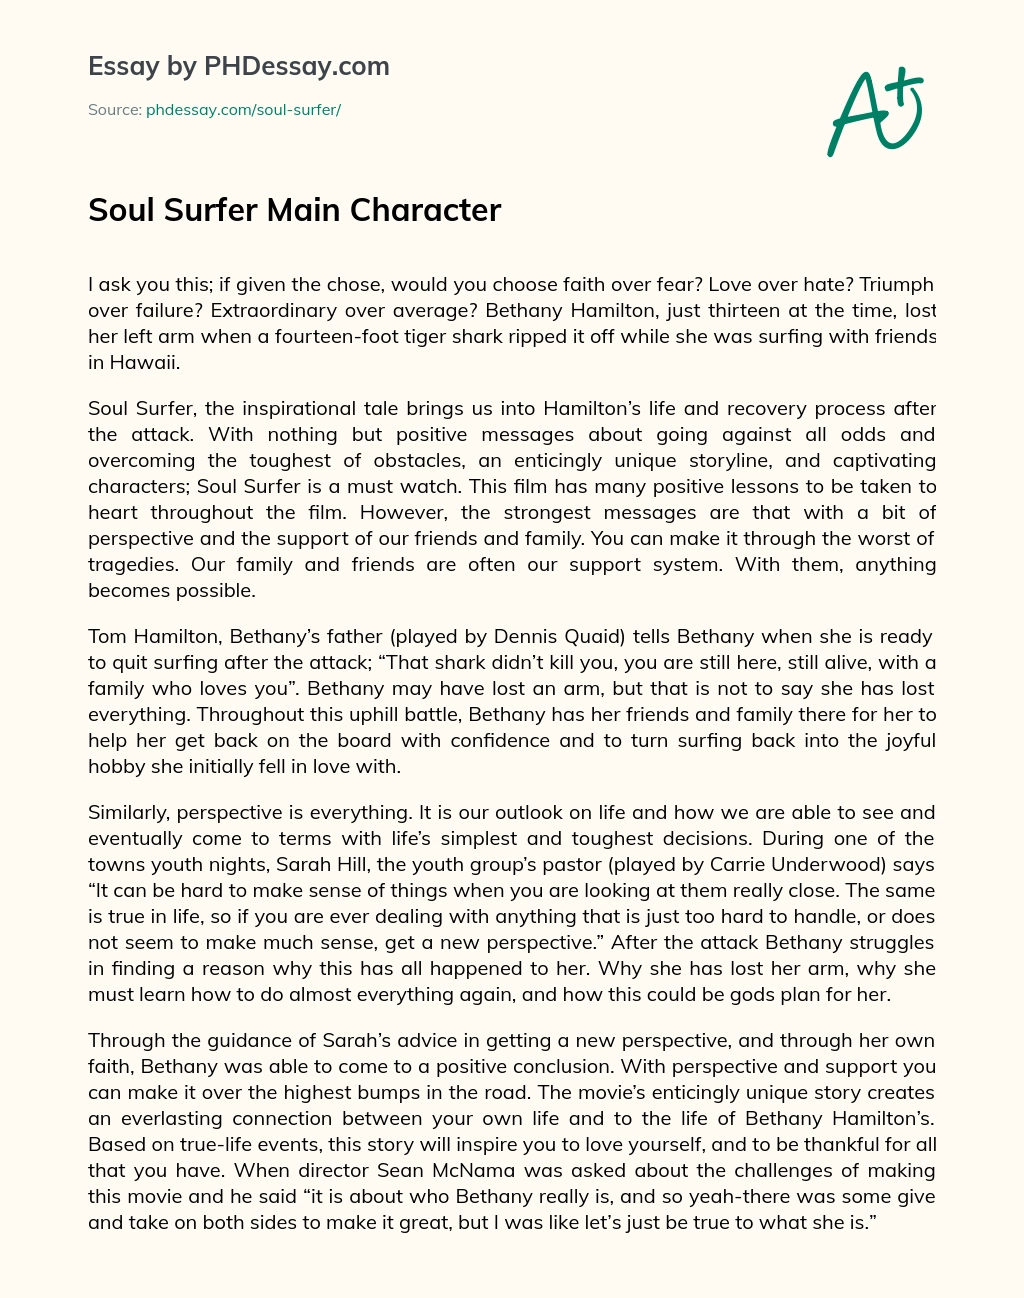 Soul Surfer Main Character essay